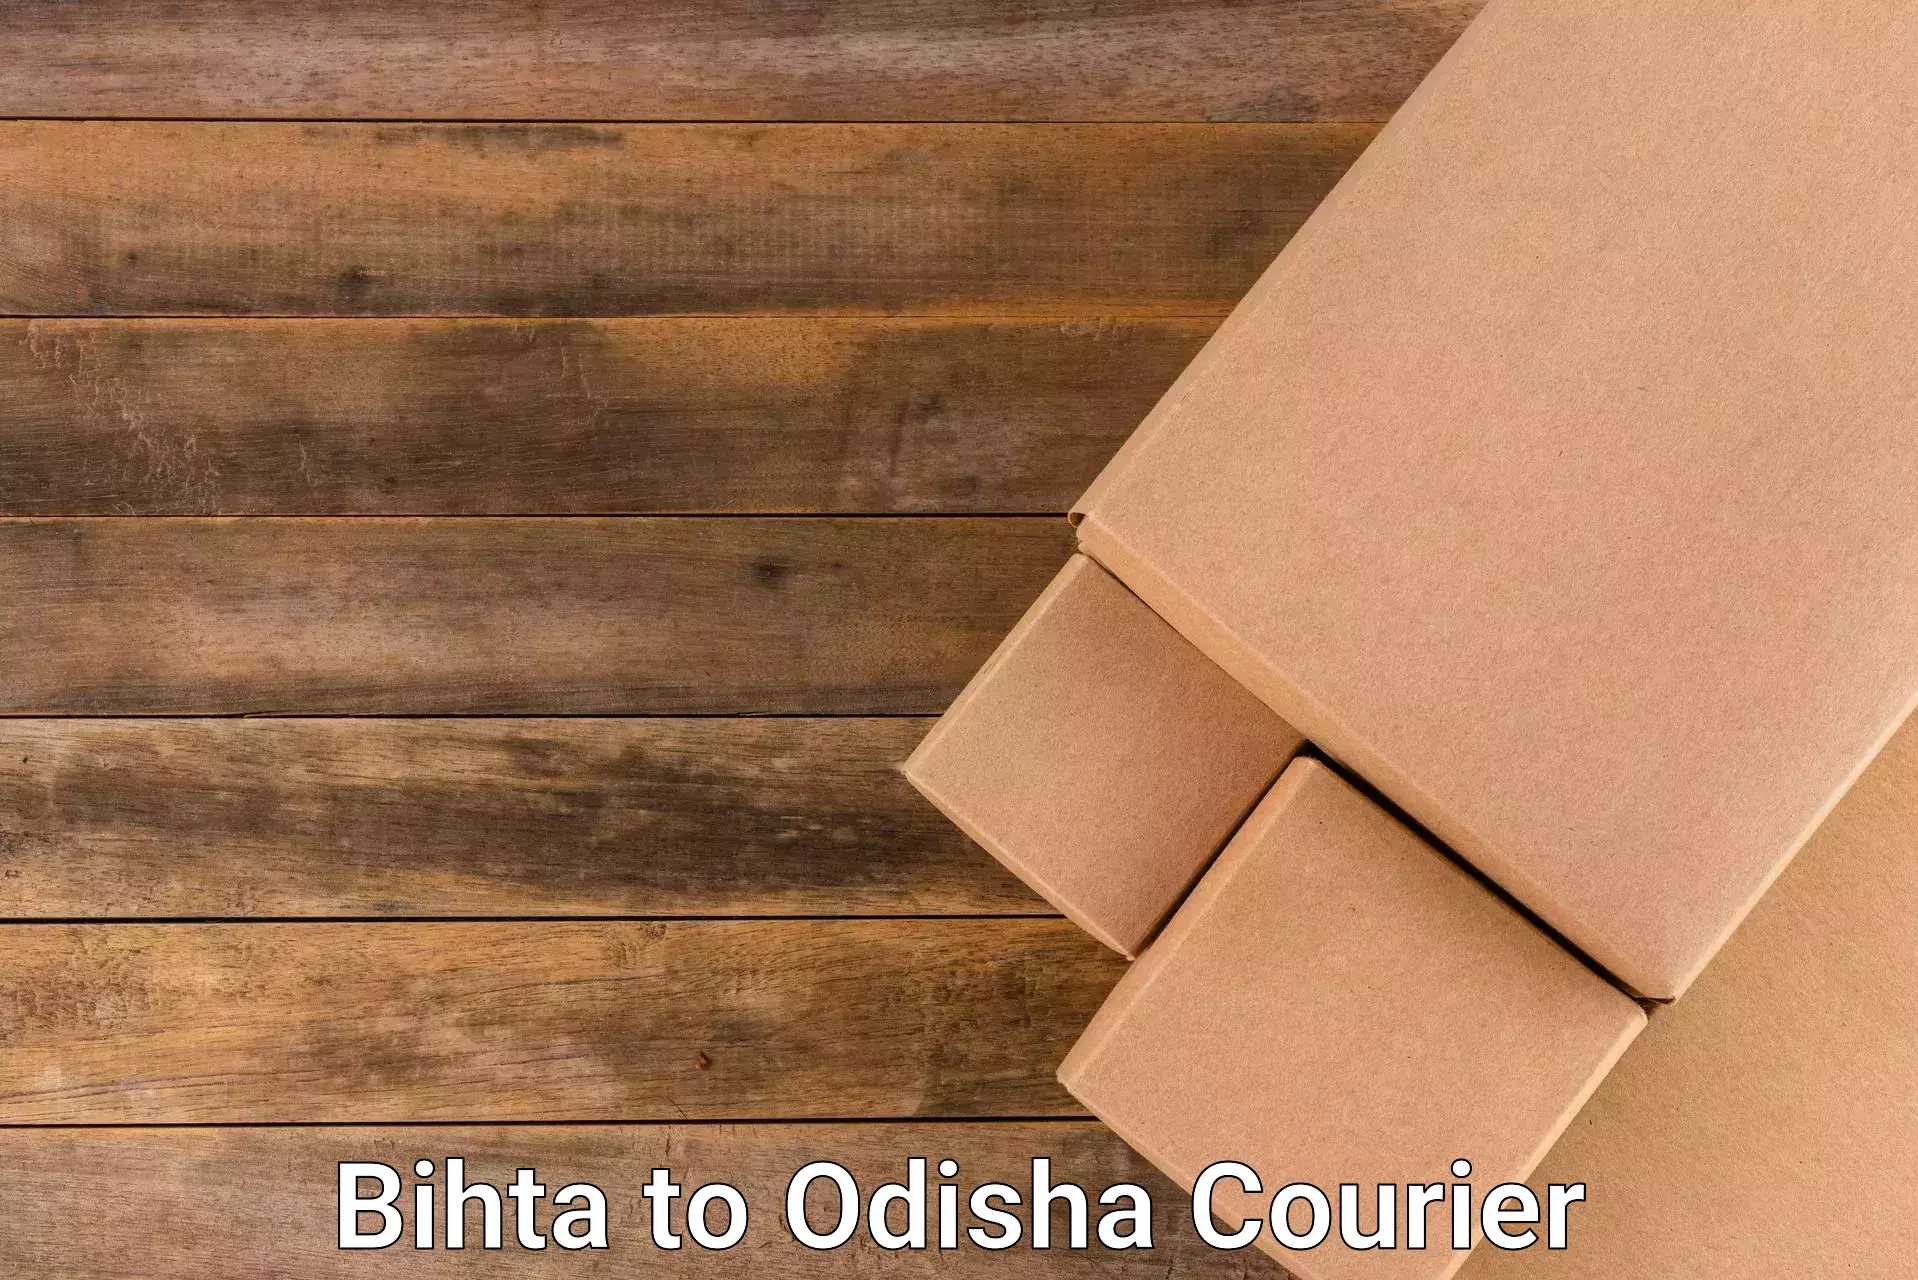 User-friendly delivery service Bihta to Mangalpur